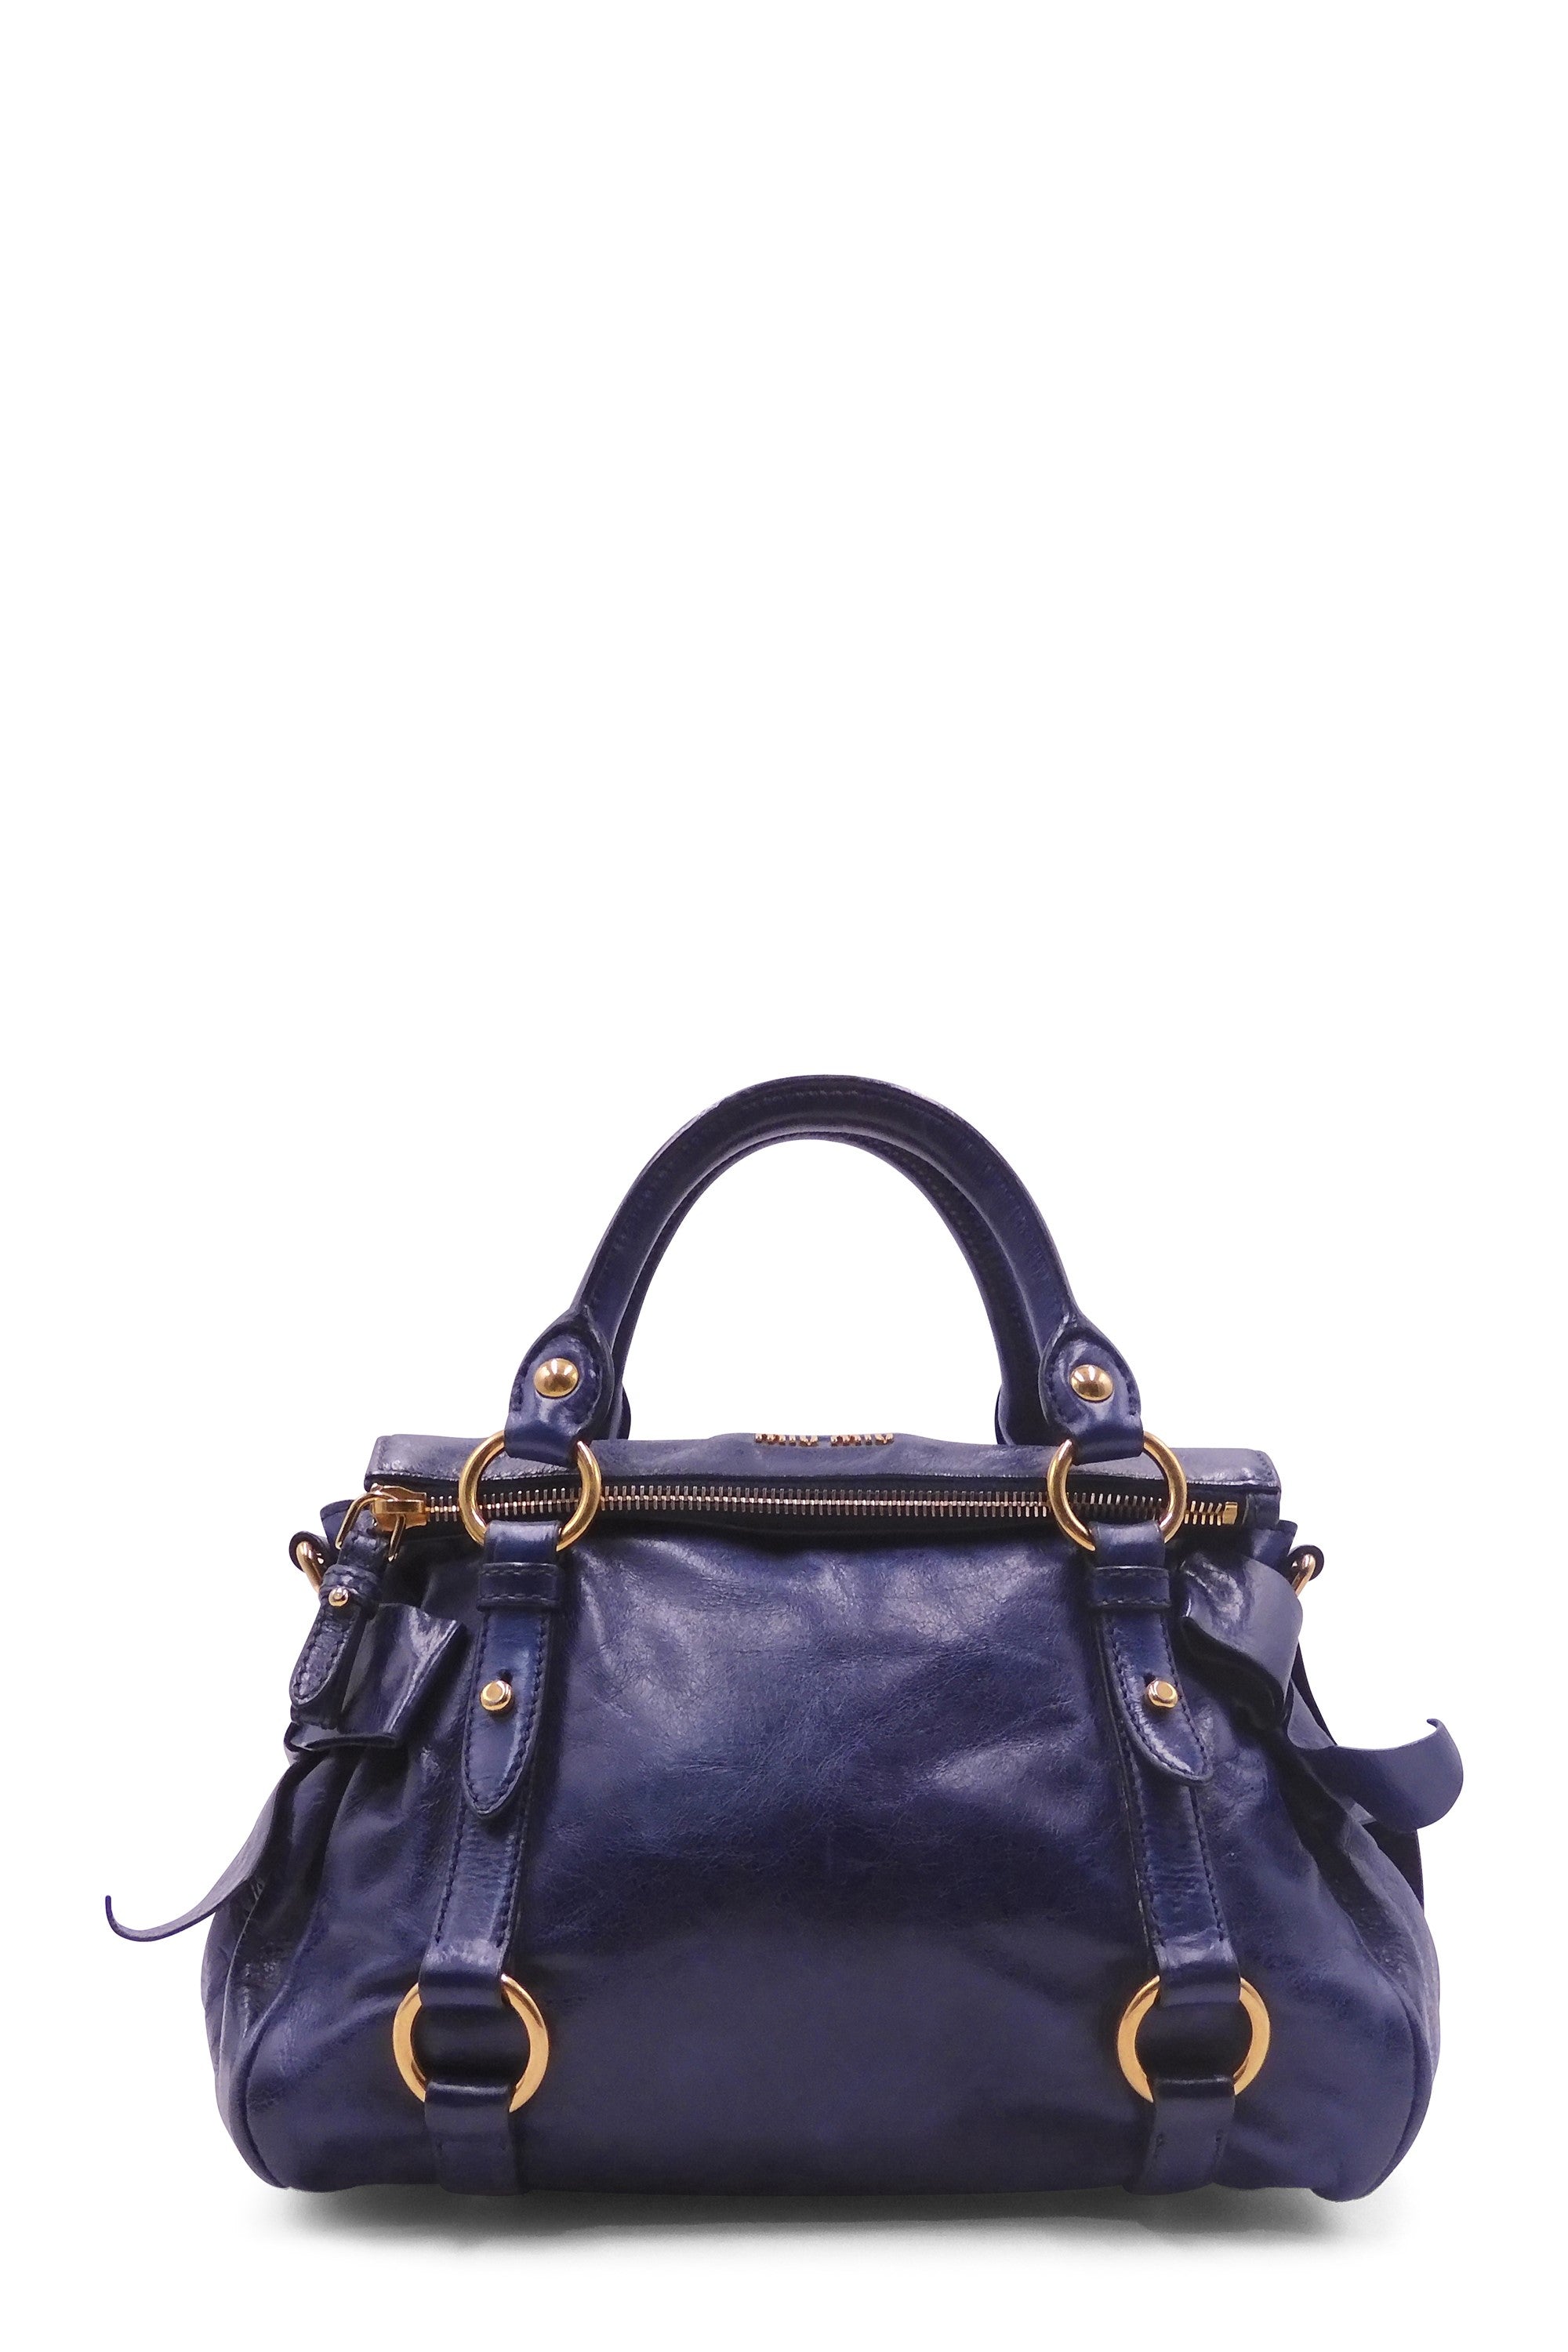 Authentic Miu Miu Prada Vitello Lux Vitello Mini Bow Handbag Bag $1450 RTL